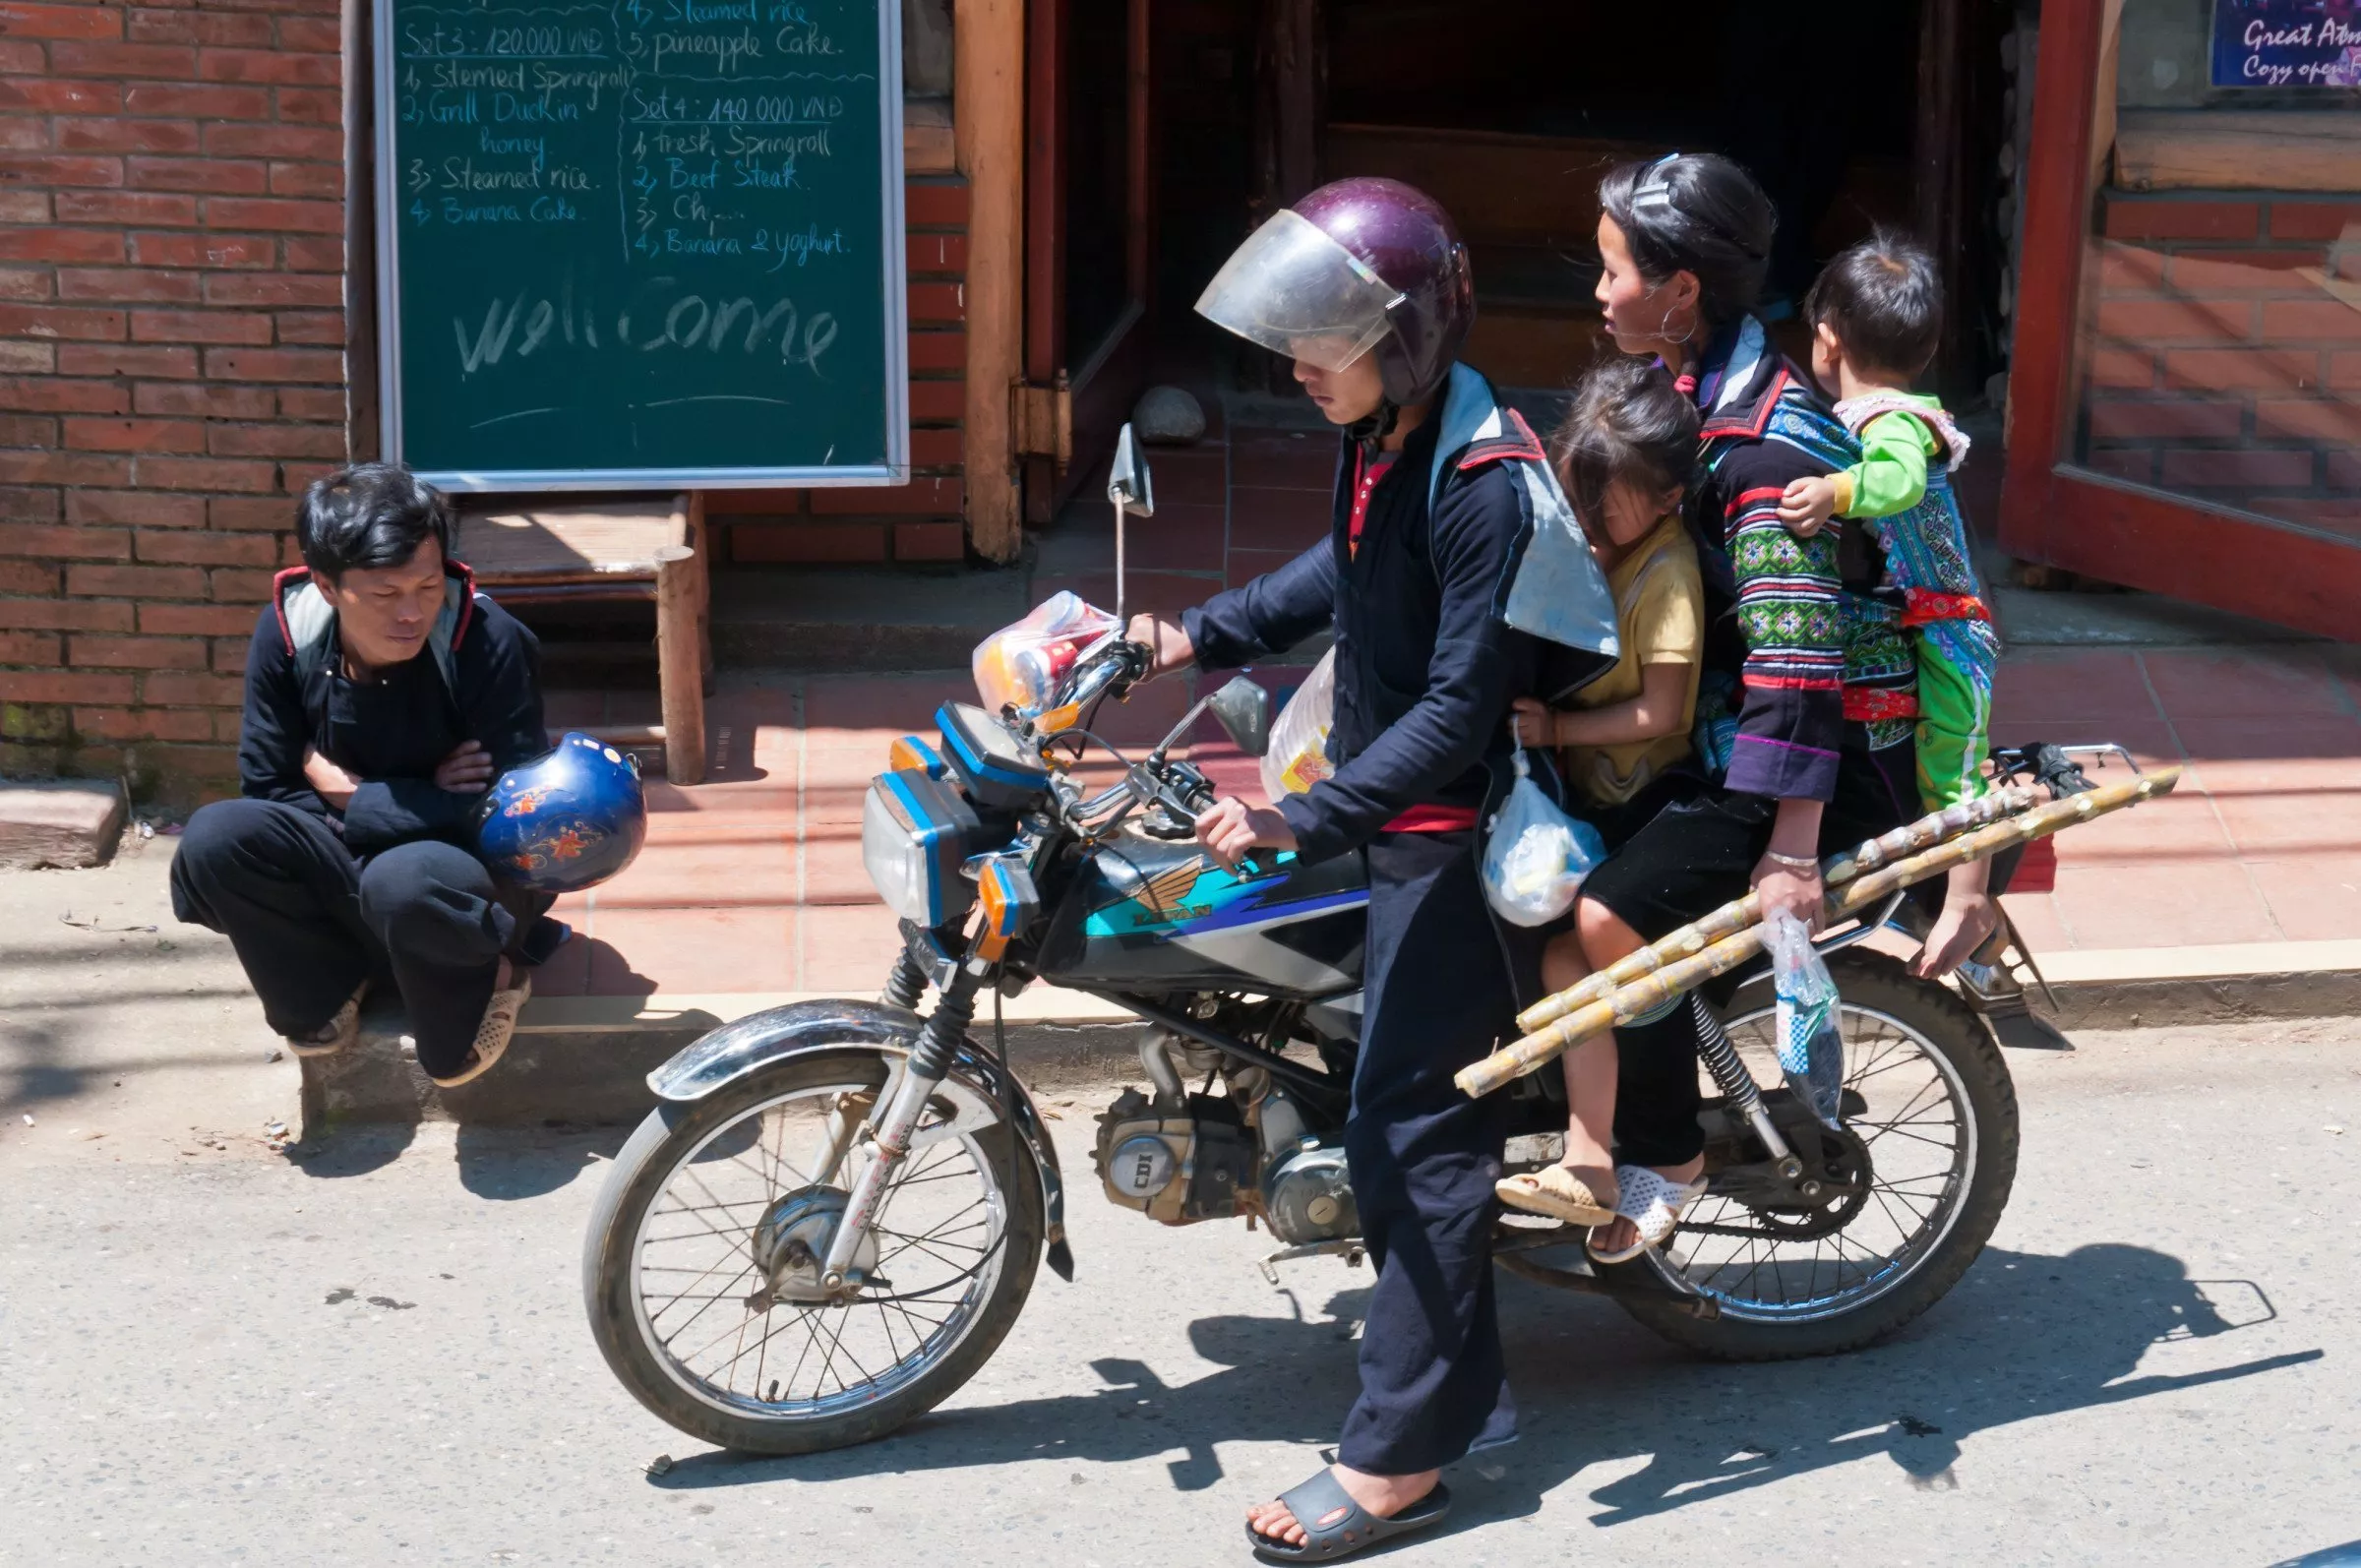 Tuan Cau Rong - Motorbike Rental in Vietnam, East Asia | Motorcycles - Rated 4.1